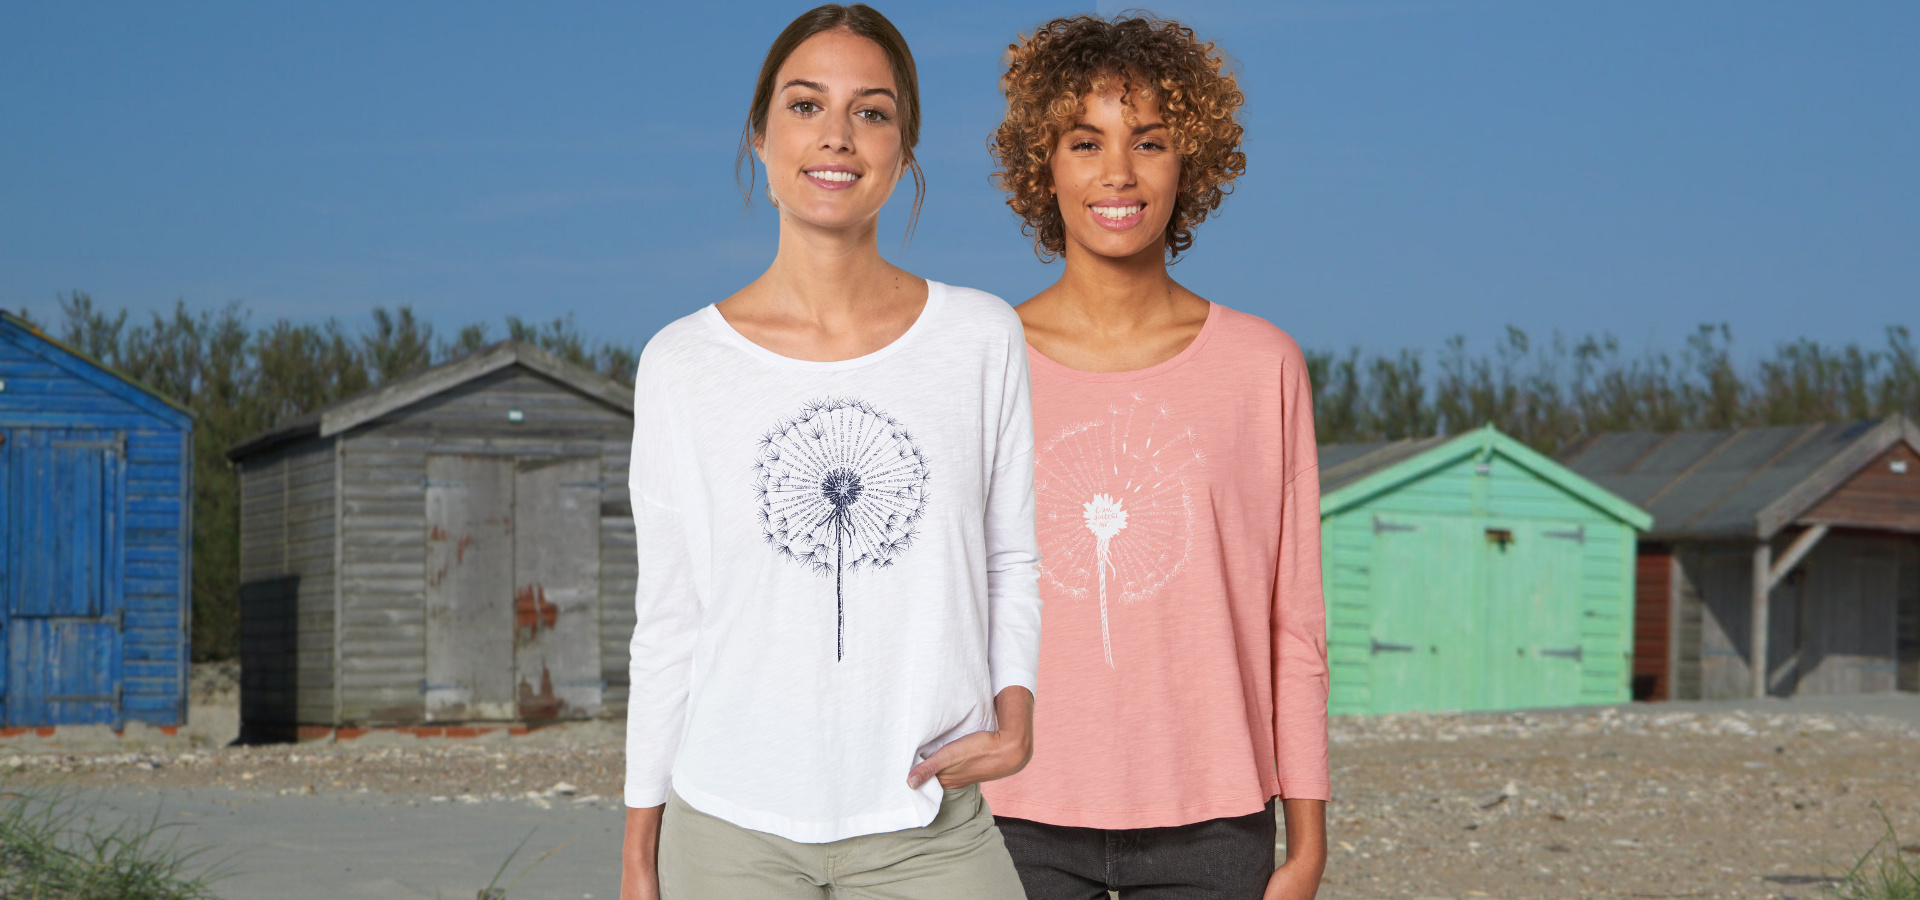 clothing with soul, women's spiritual t-shirts